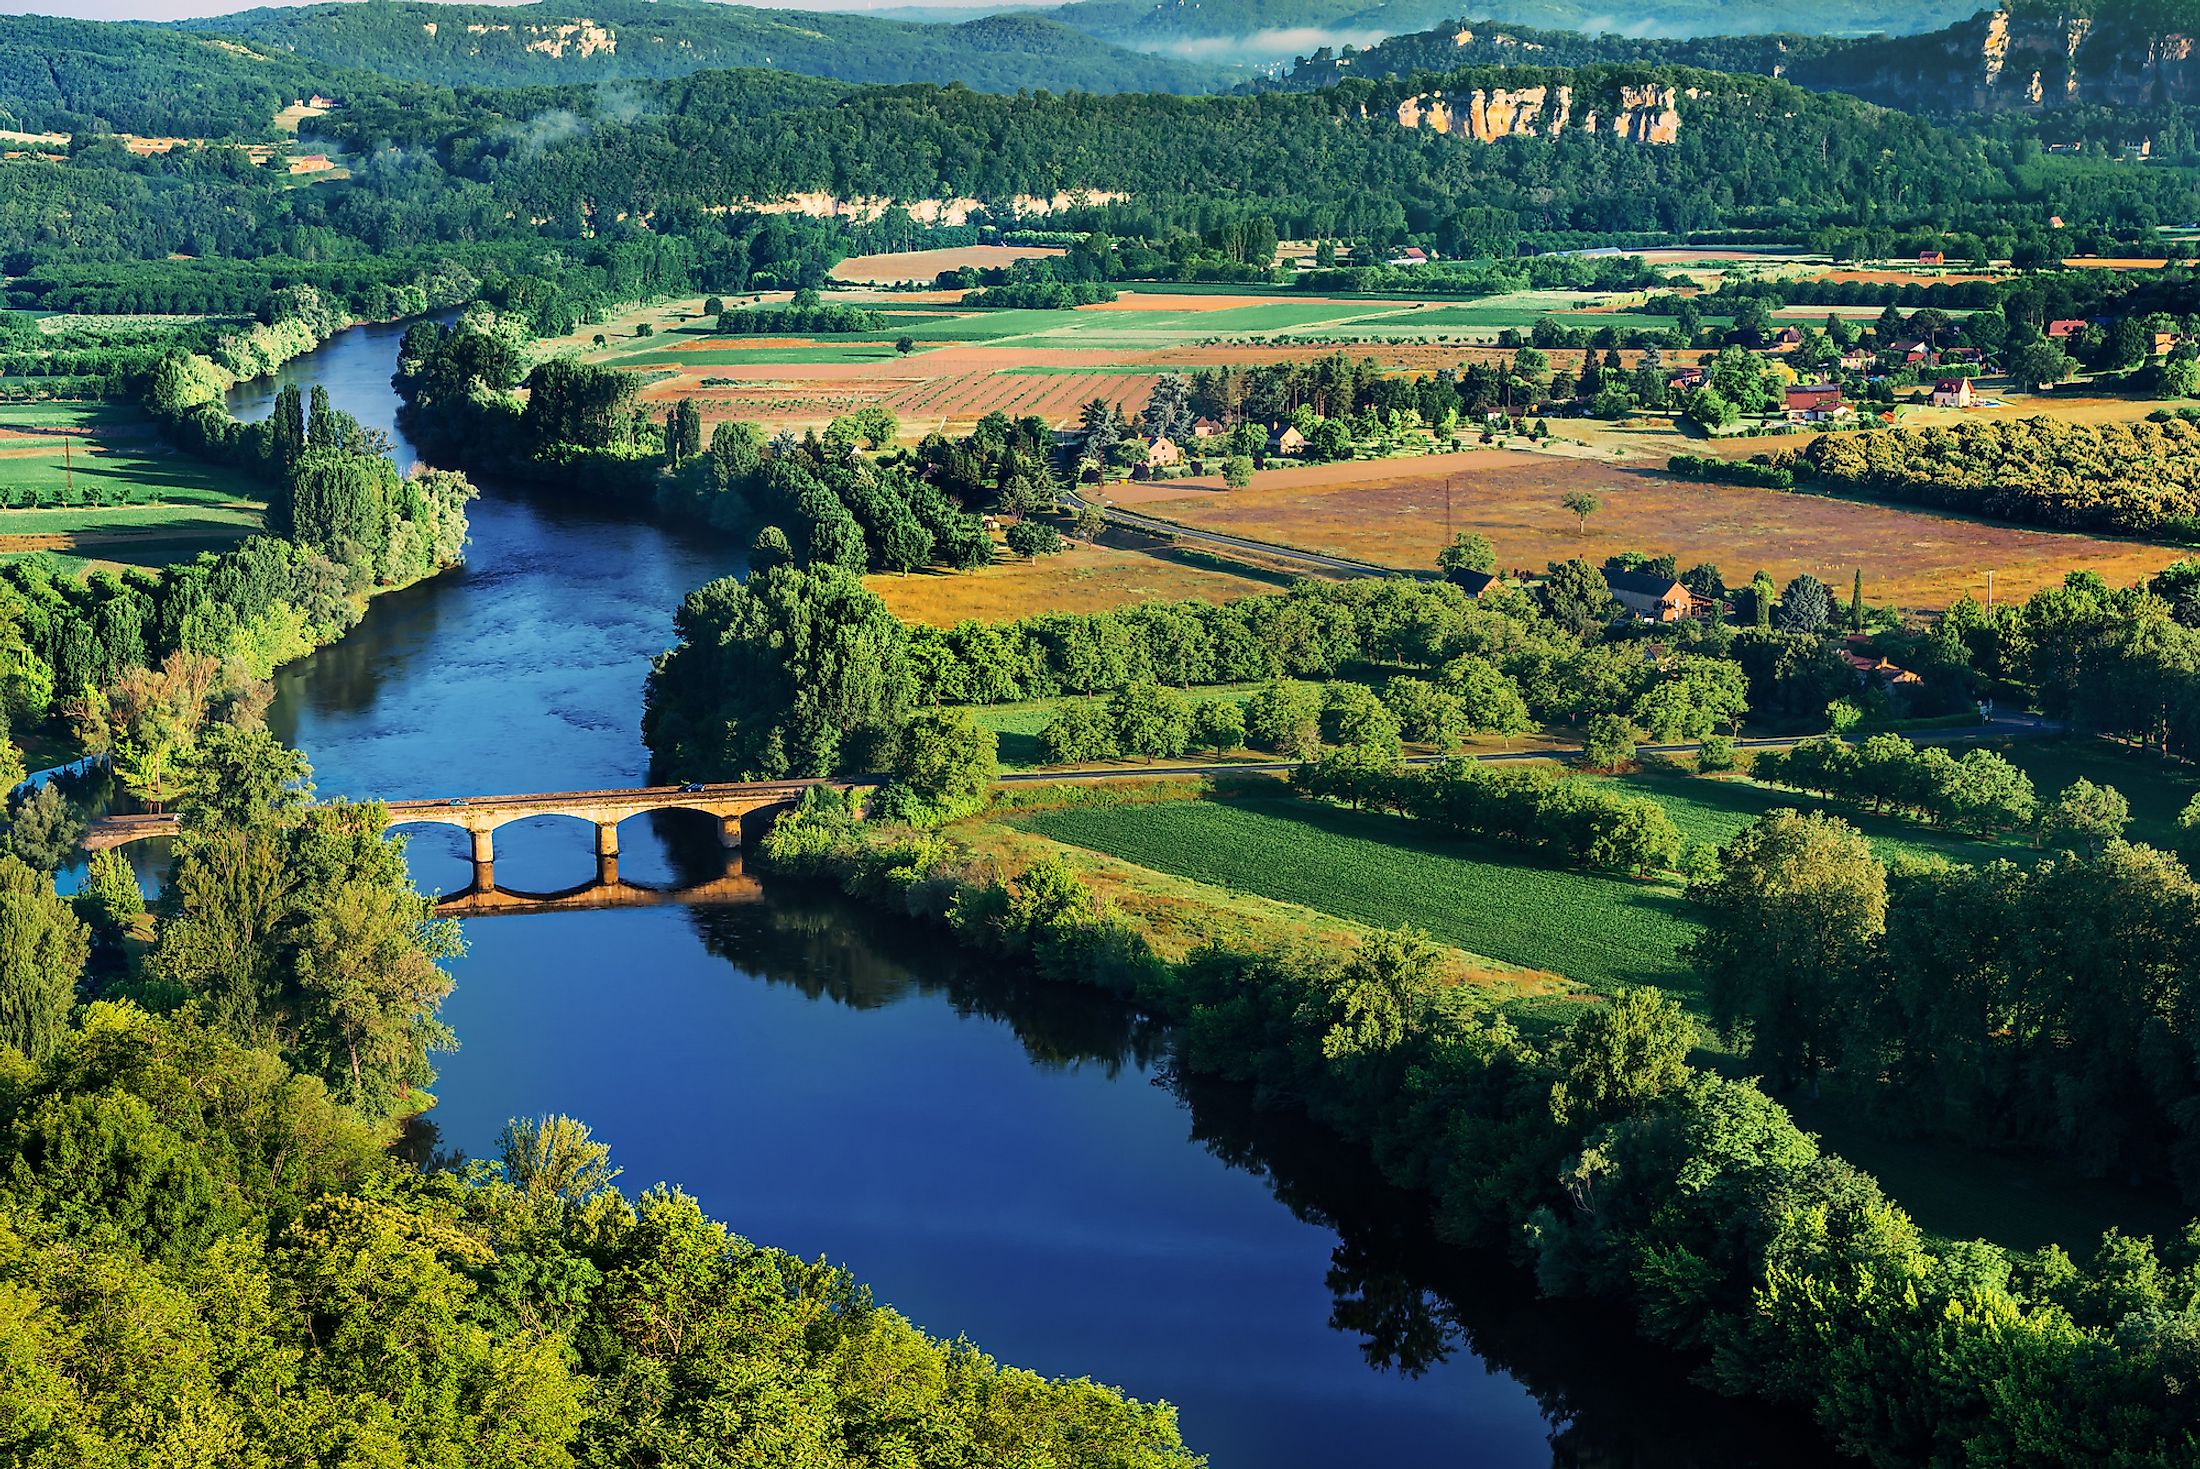 Medieval-era bridge over the Dordogne River.